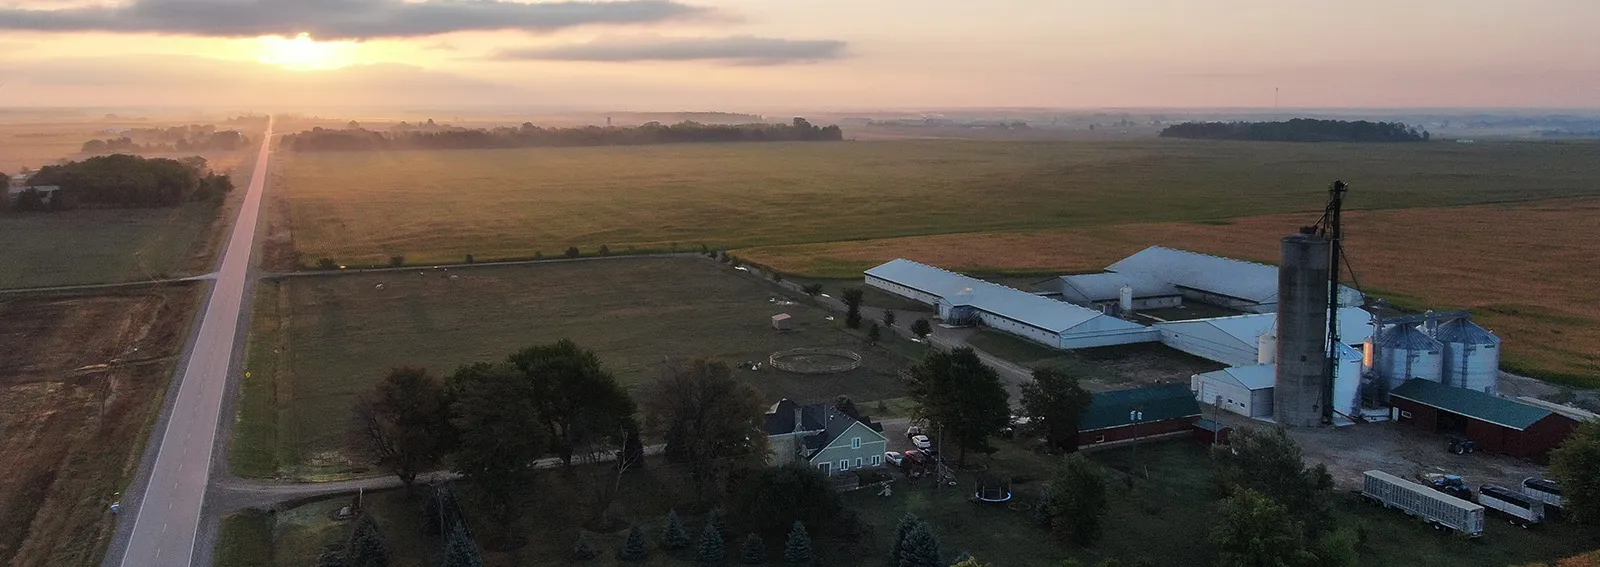 sunset over a farm field